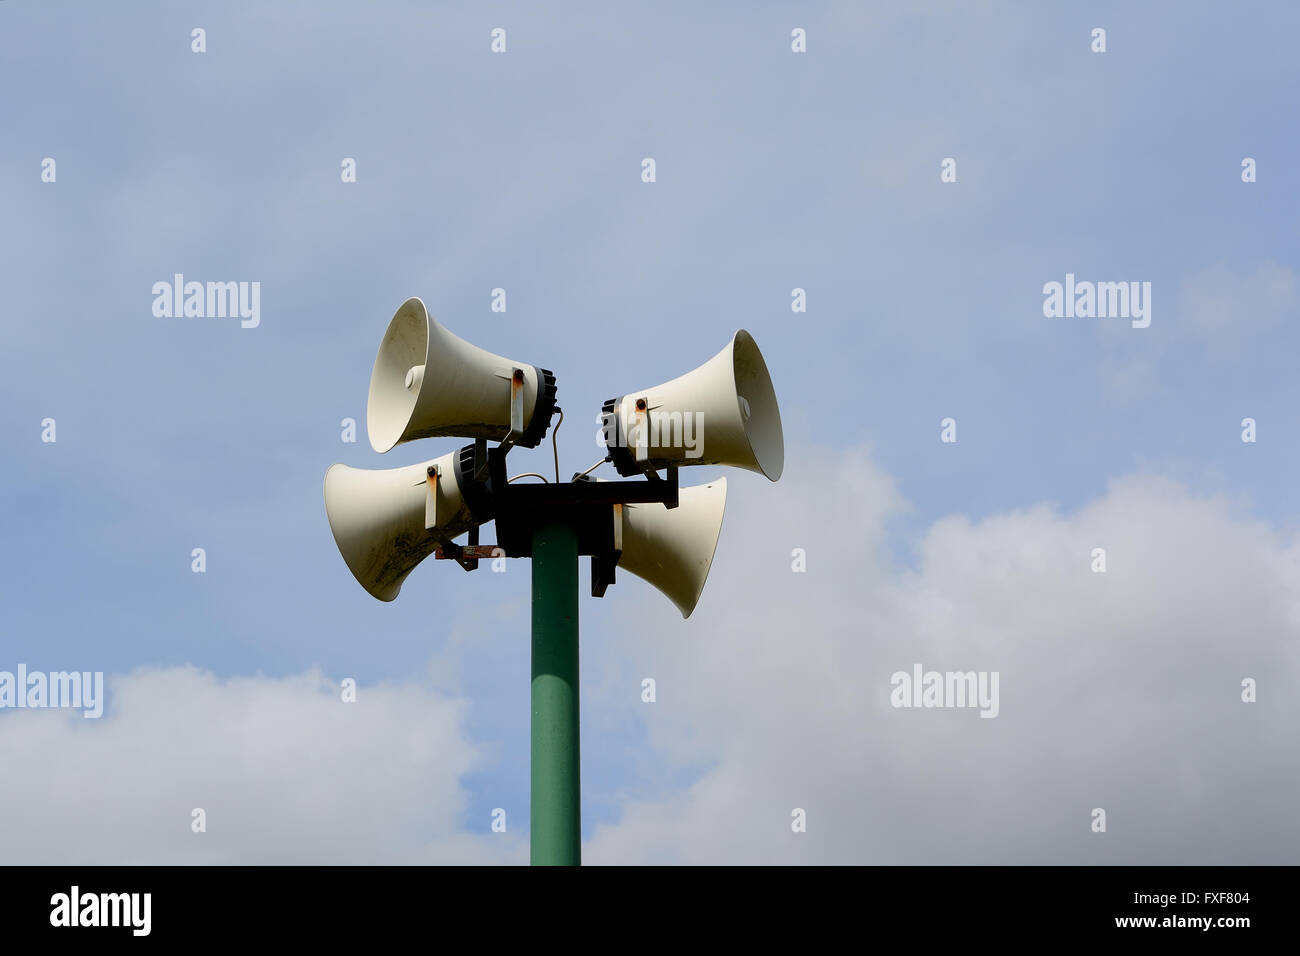 Air raid sirens tannoy loud speakers at Imperial War Museum, Duxford, UK Stock Photo